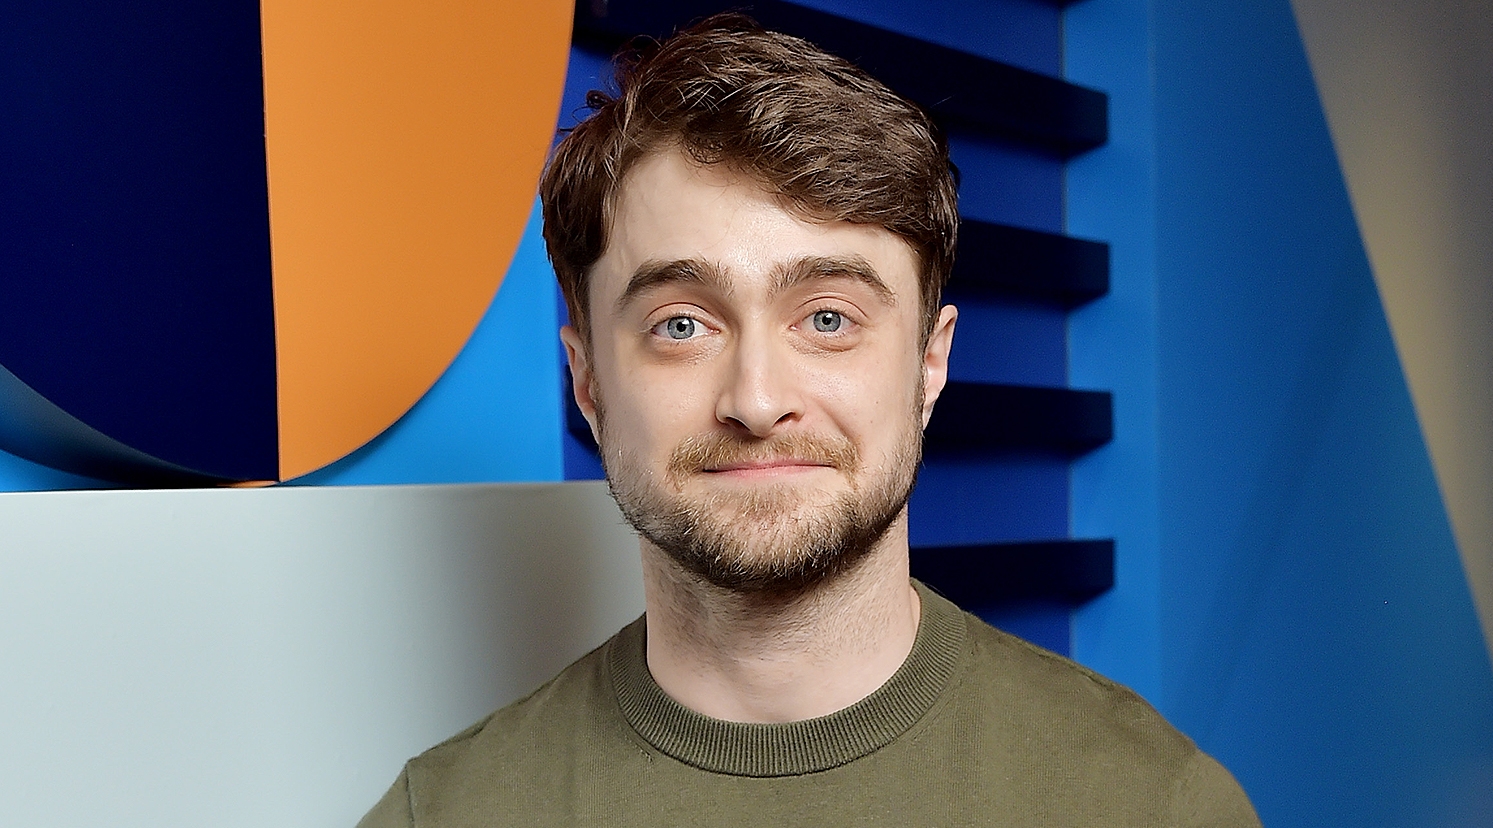 Alasan Daniel Radcliffe Nggak Punya Medsos: Belum Siap Mental 